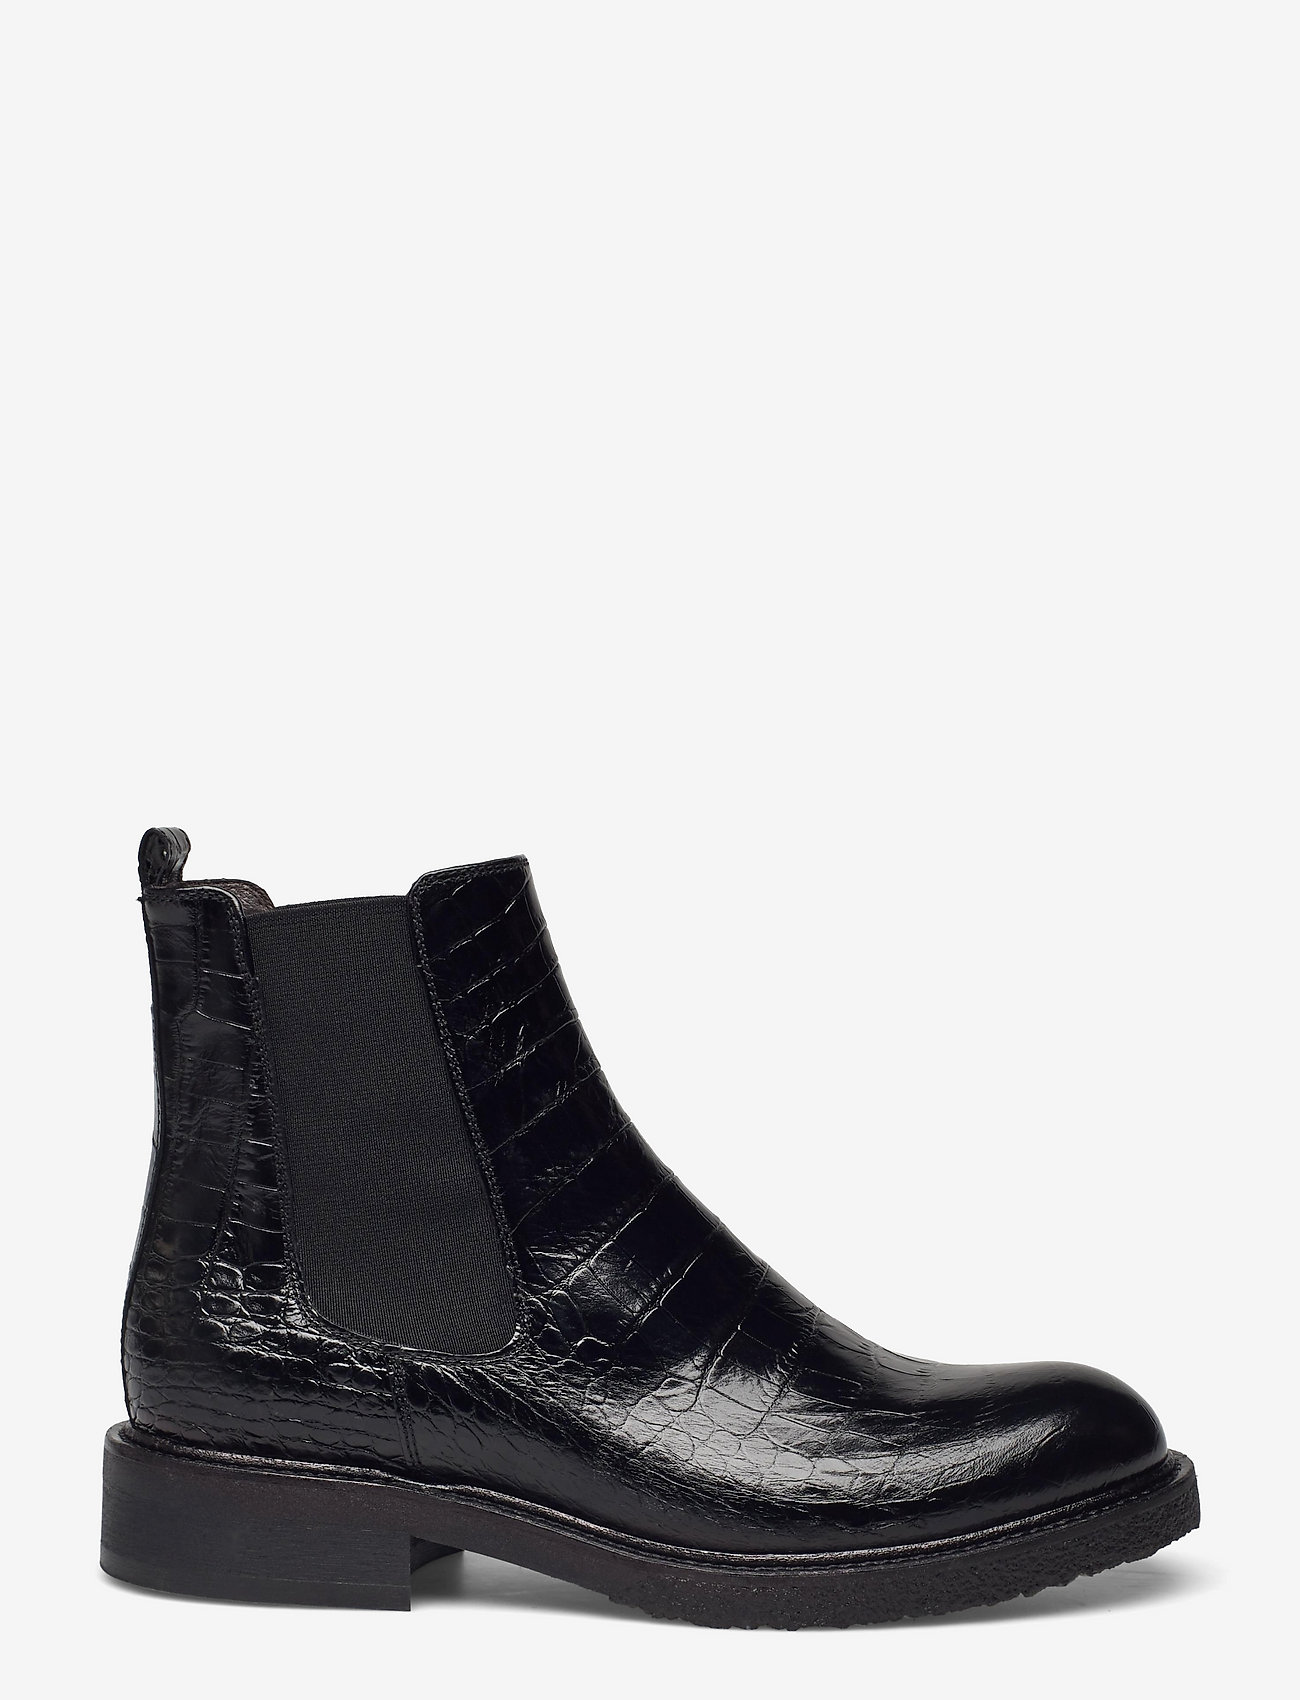 Billi Bi - Boots - chelsea boots - black luisiana croco 10 - 1